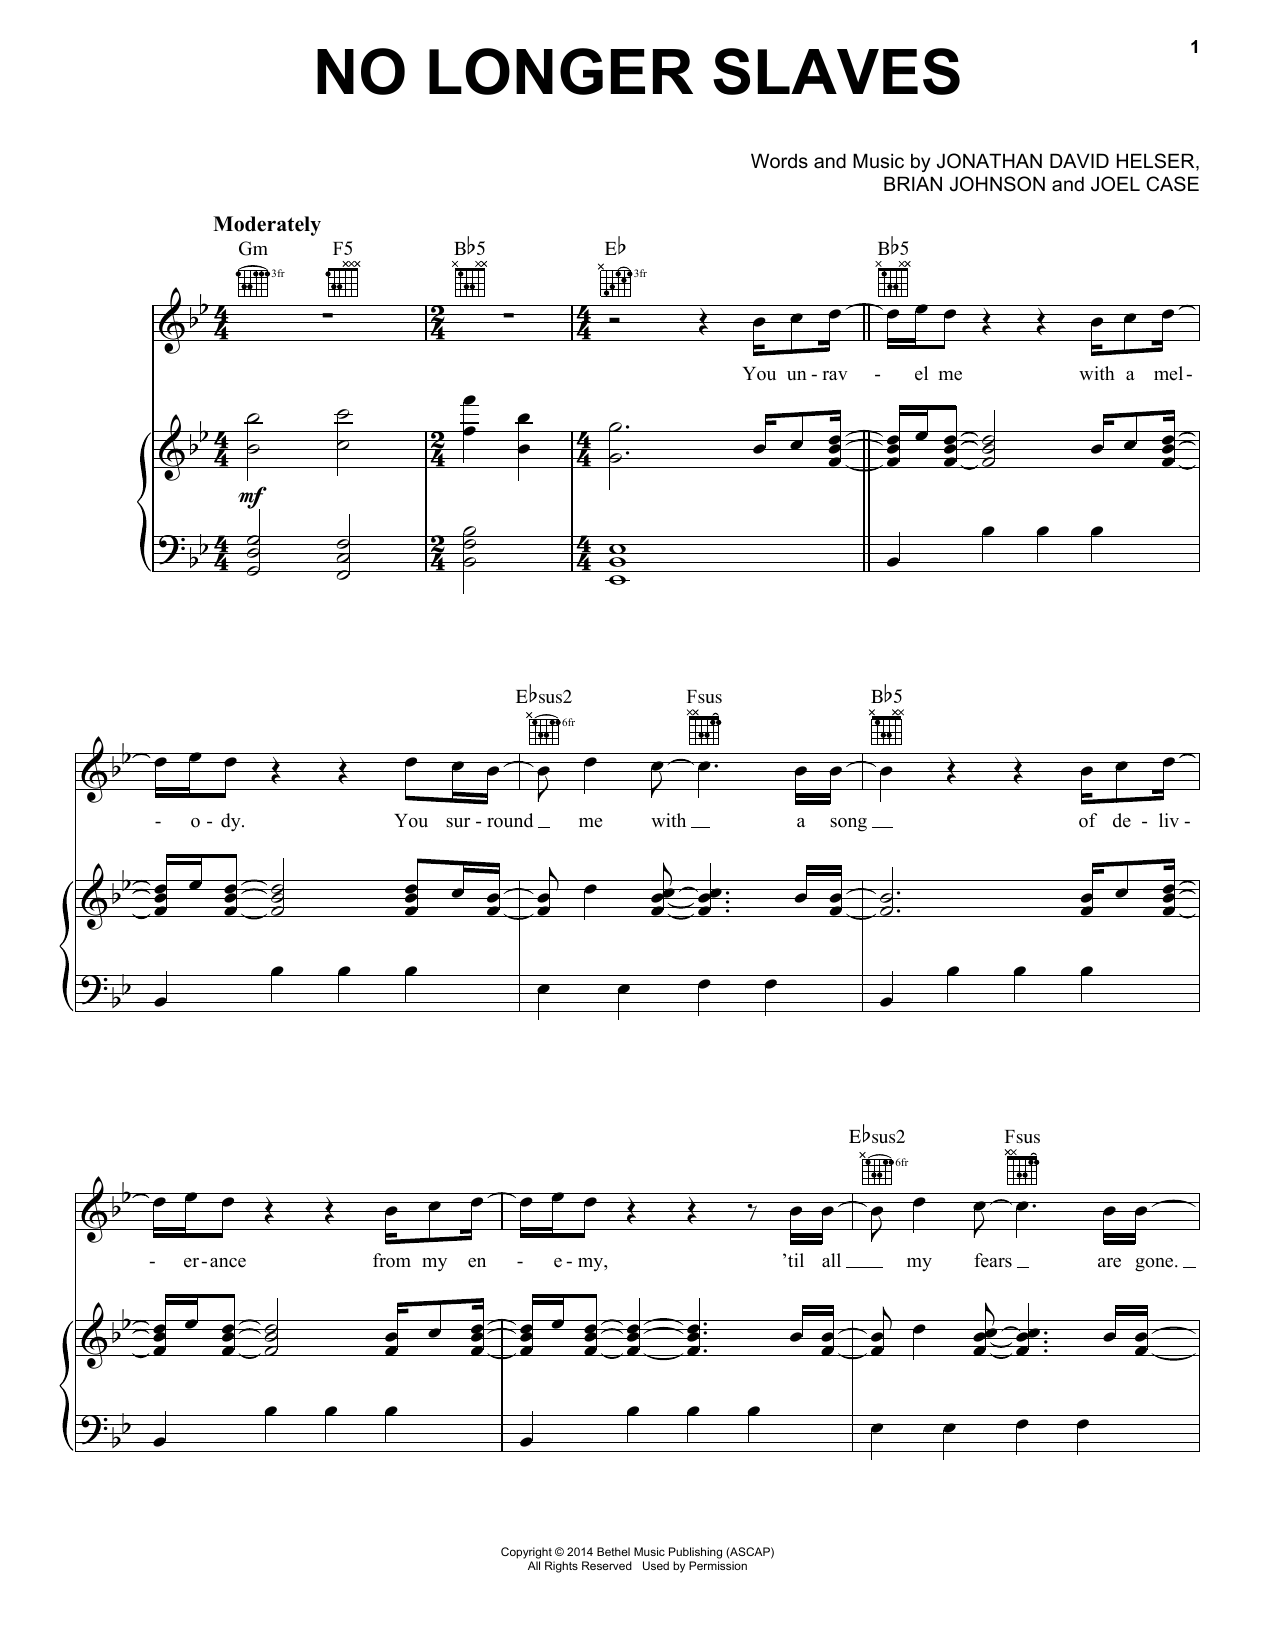 Bethel Music "No Longer Slaves" Sheet Music PDF Notes, Chords | Christian Score Piano, Vocal